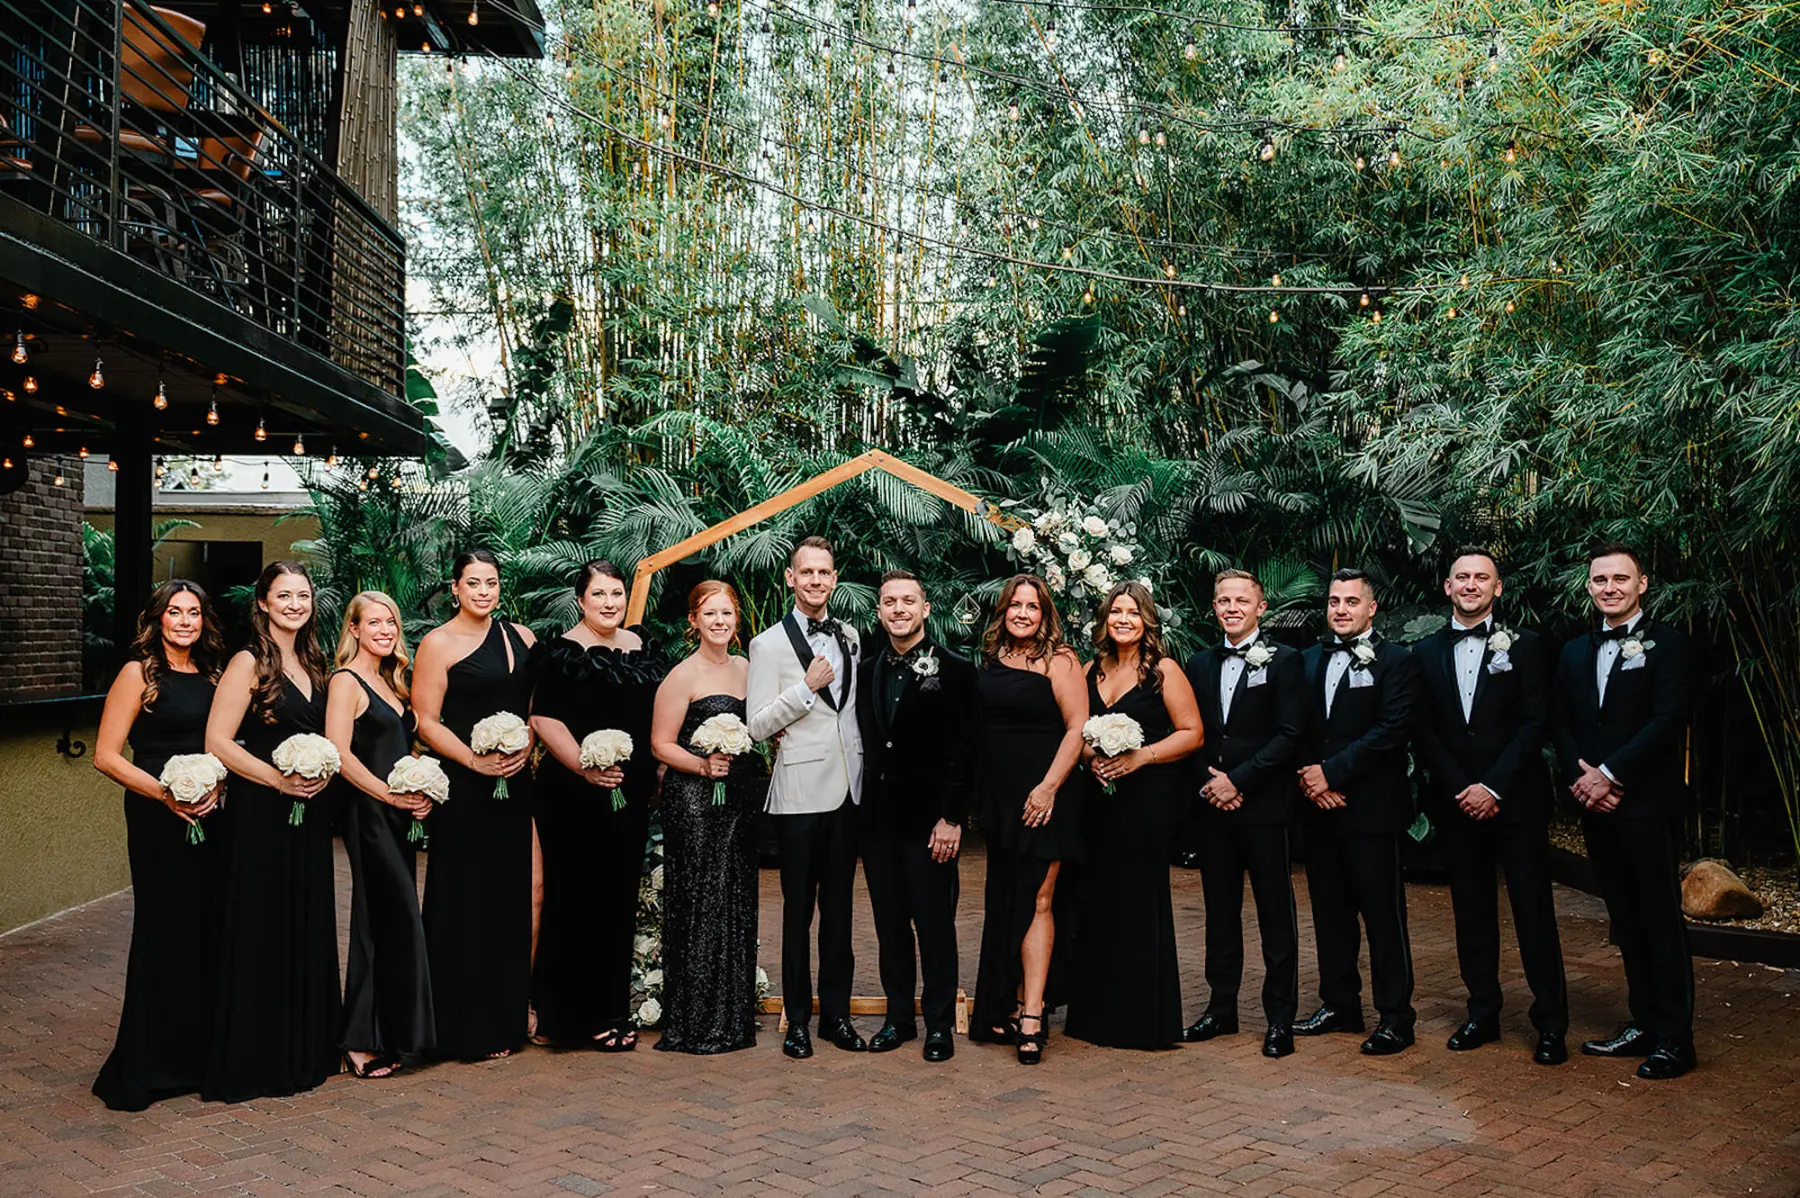 Great Gatsby Inspired Black Tie Wedding Party Attire Ideas | Mismatched Black Bridesmaid Dress | Tampa Bay Event Venue Nova 535